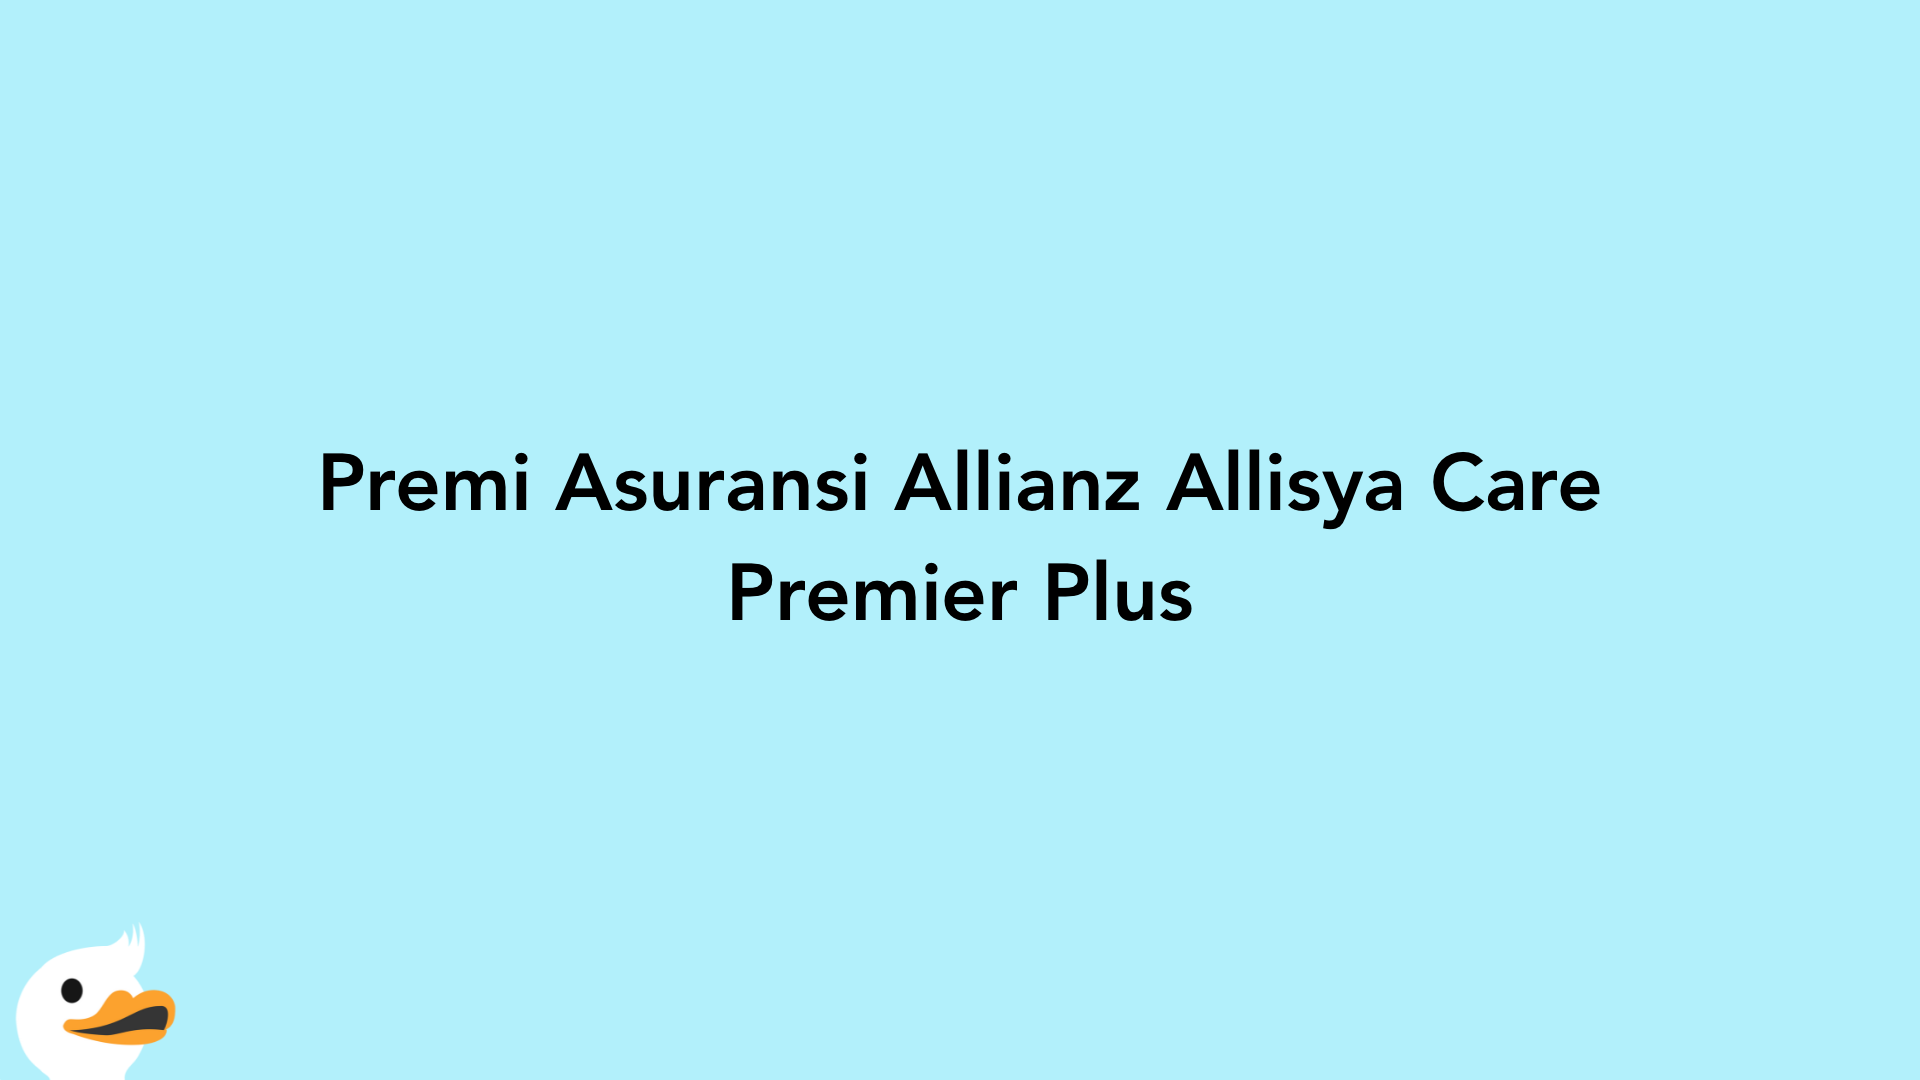 Premi Asuransi Allianz Allisya Care Premier Plus